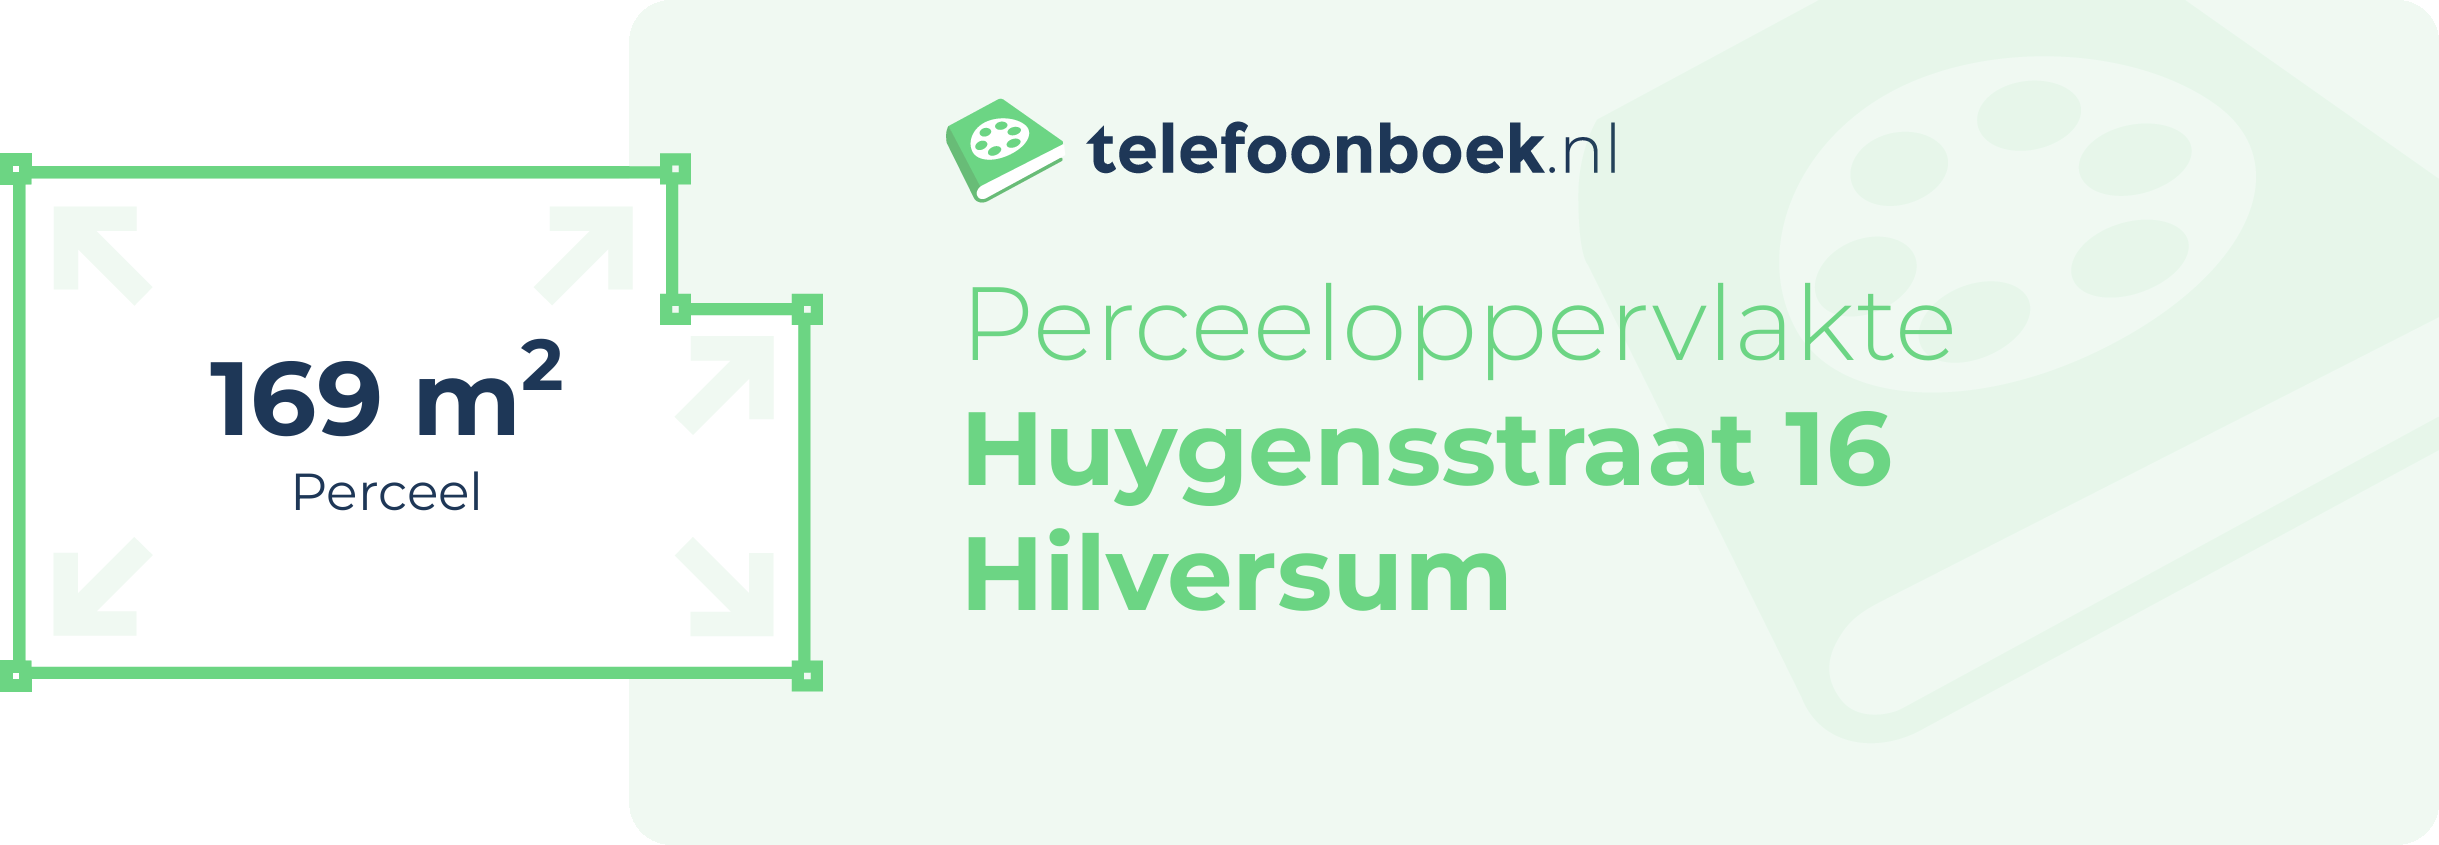 Perceeloppervlakte Huygensstraat 16 Hilversum